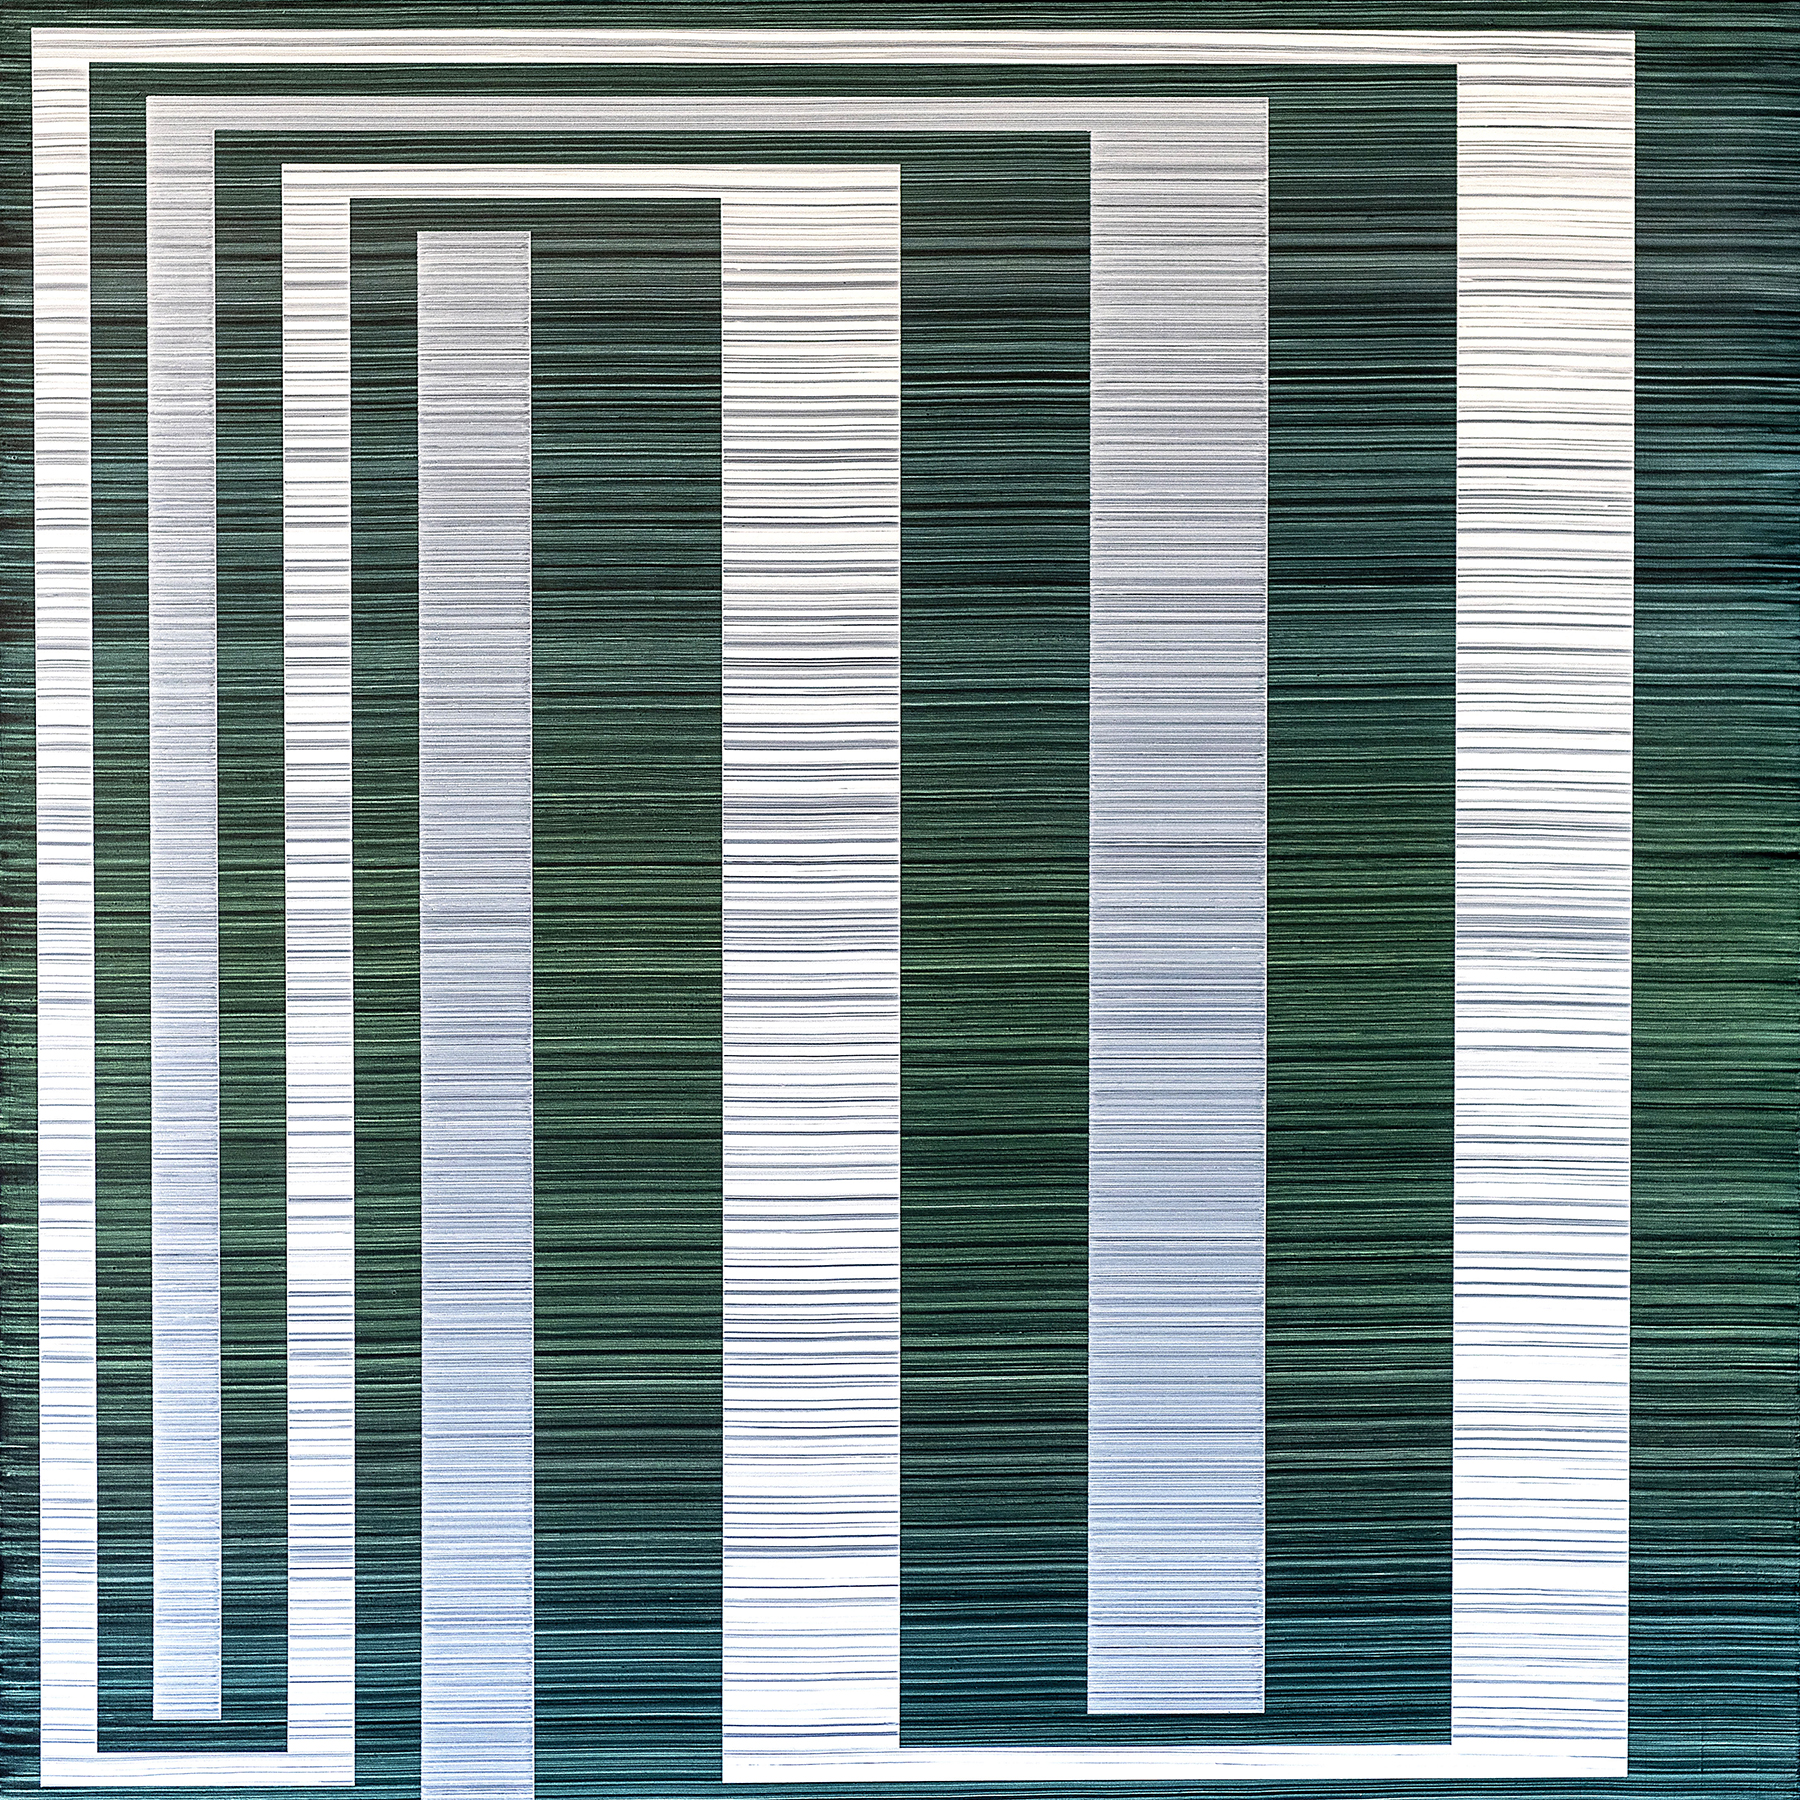 Bandwidth Painting (Invidia), 39 x 39 inches / 99 x 99 cm, acrylic on muslin on panel, 2019